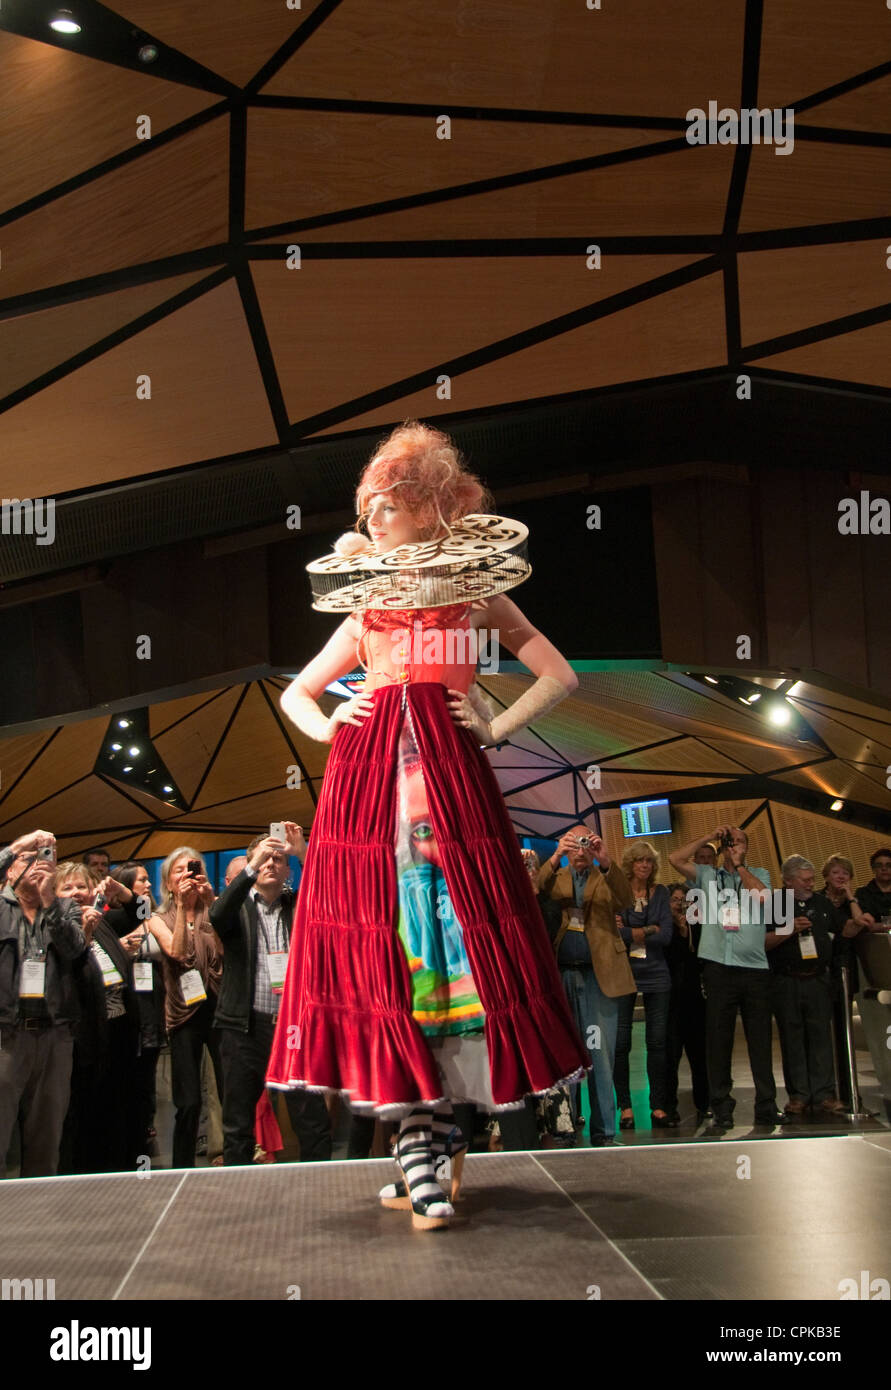 New Zealand, North Island, Wellington, fashion show for WOW World of Wearable Art. Stock Photo